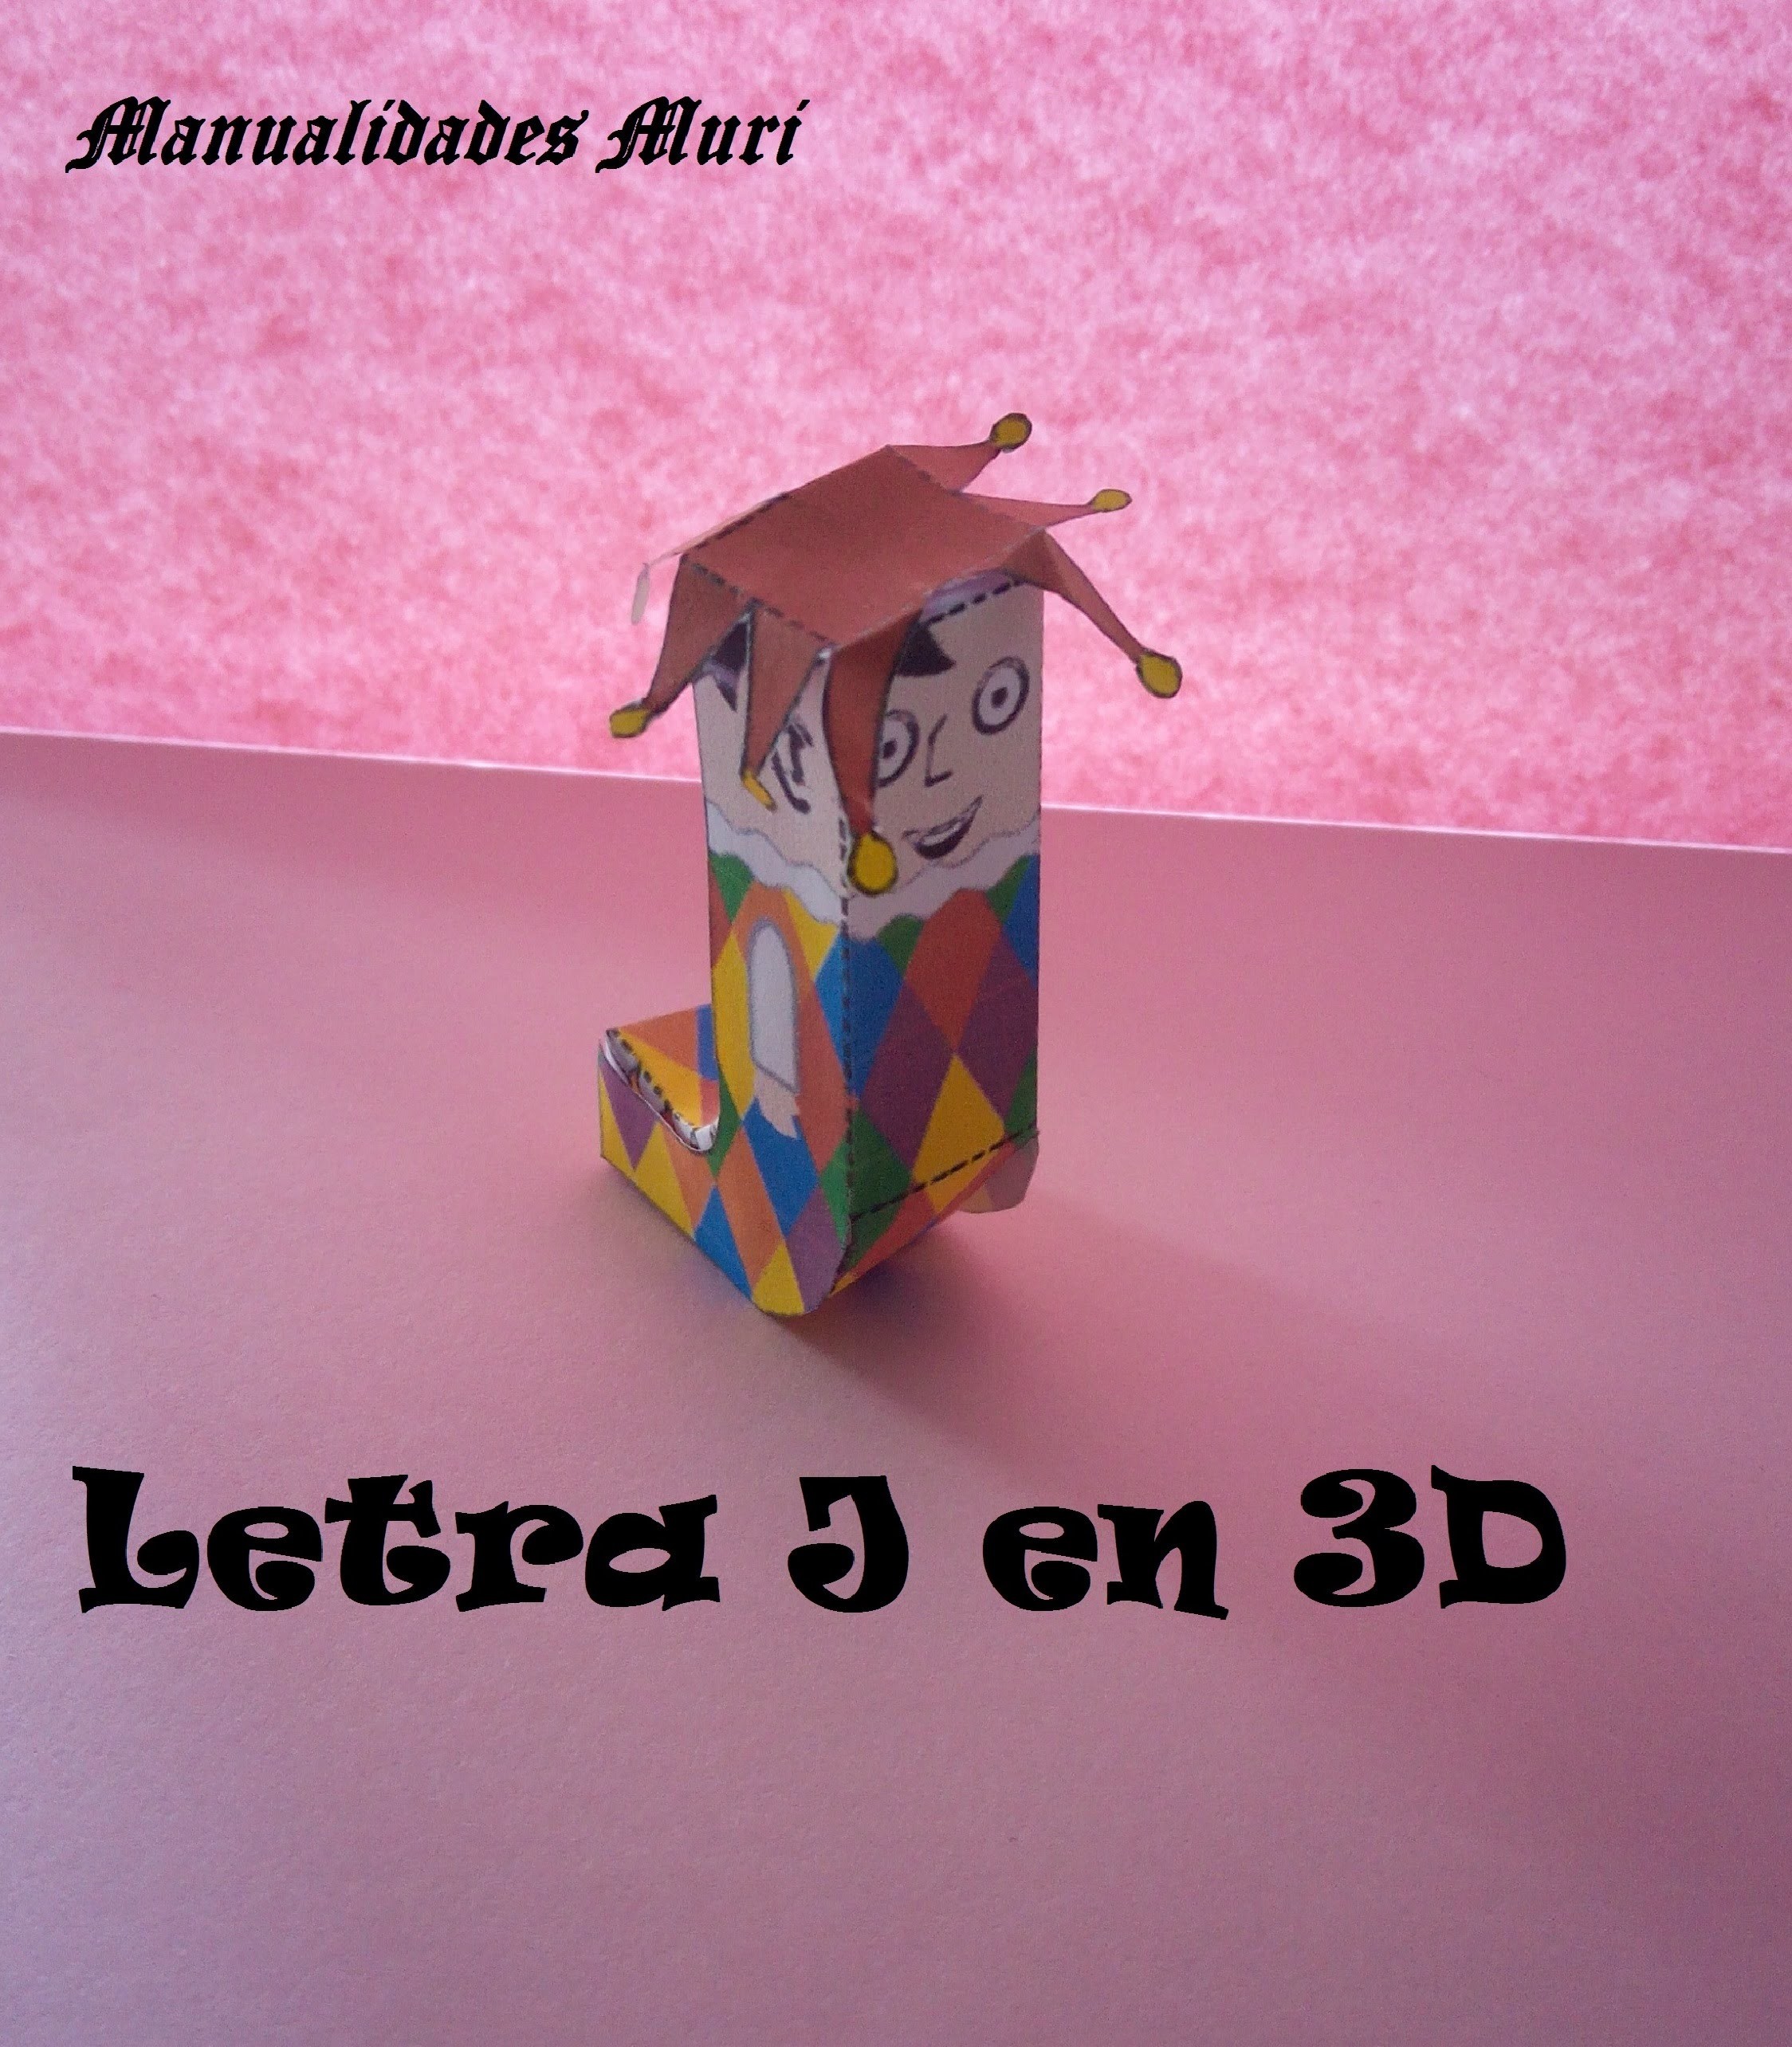 Manualidades, Letra J en 3D. PaperCraft. Alfabeto.